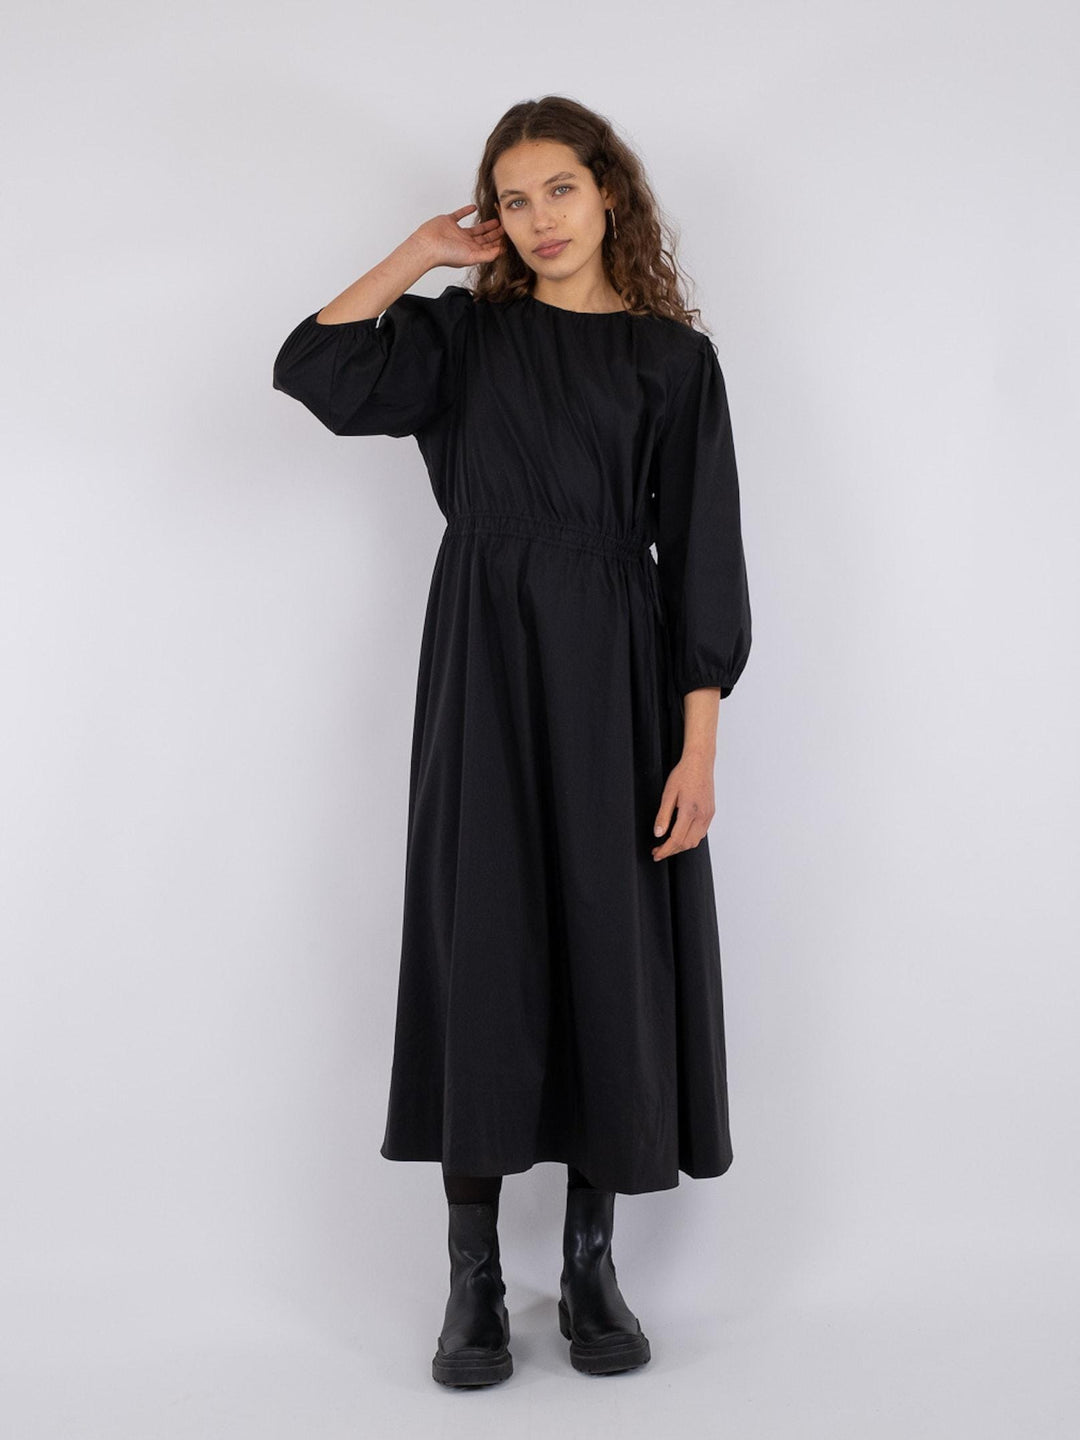 Neo Noir - Eymi Poplin Dress - Black Kjoler 